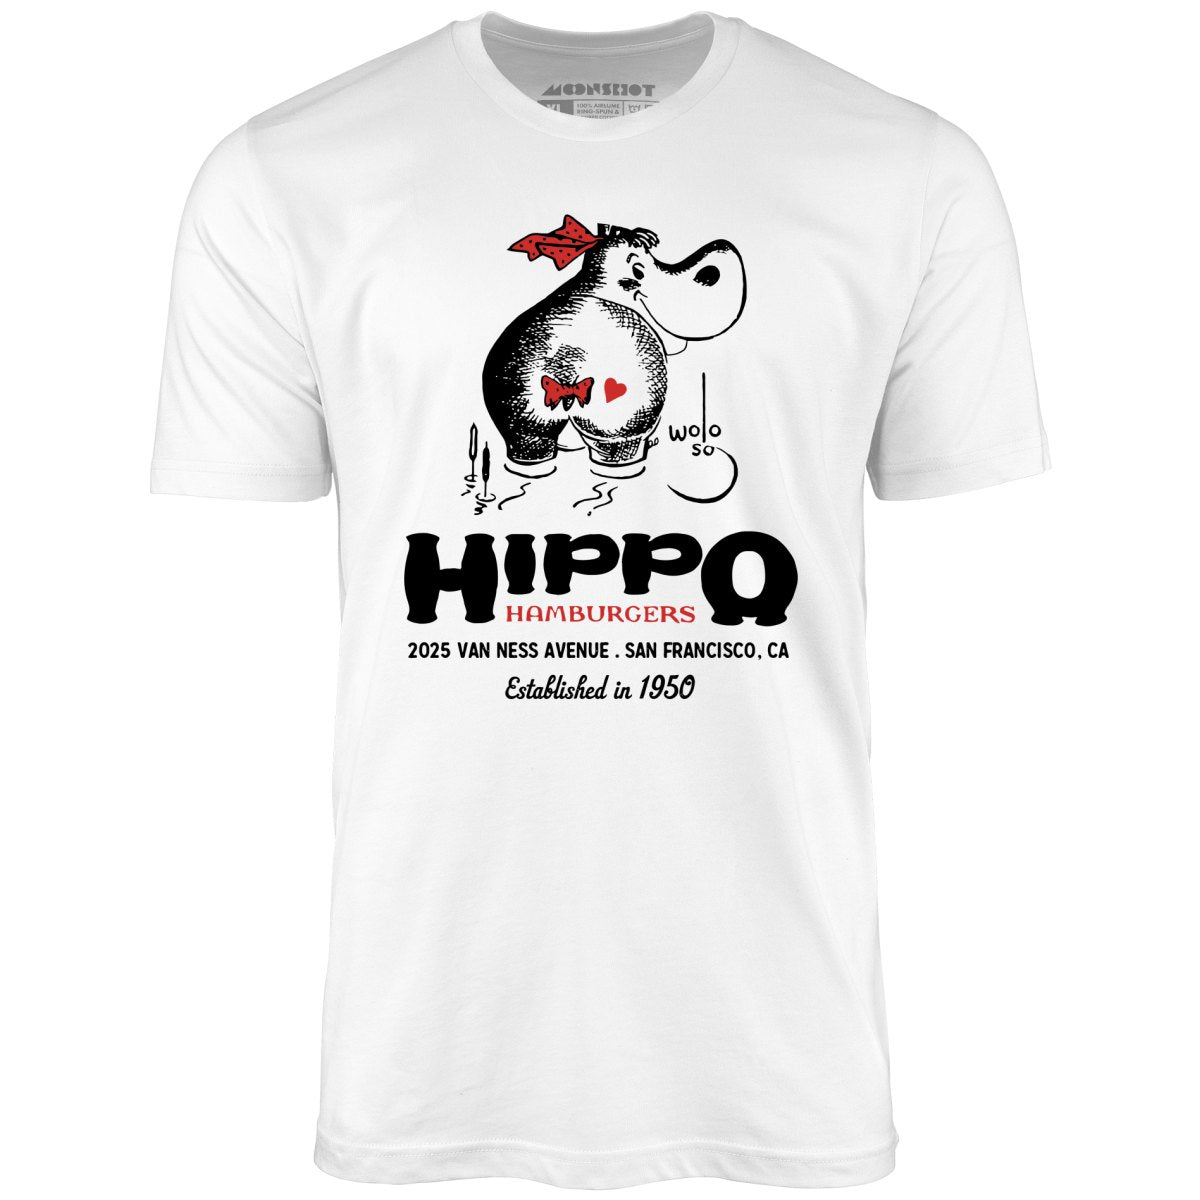 Hippo Hamburgers - San Francisco, CA - Vintage Restaurant - Unisex T-Shirt